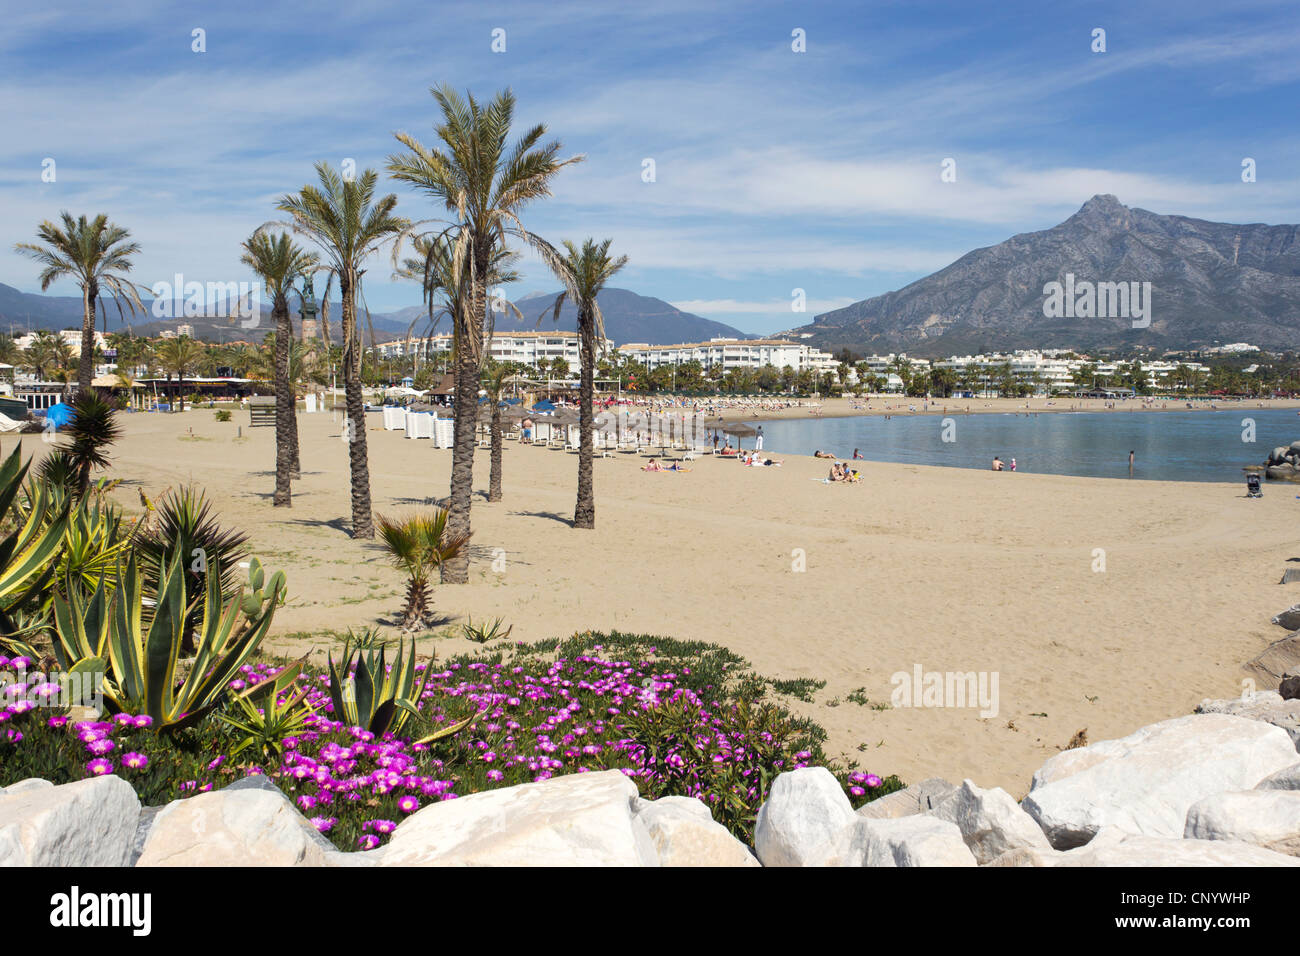 Puerto Banus, Marbella, Costa del Sol, Andalucia, Spain. View of the beach with La Concha mountain in the background. Stock Photo